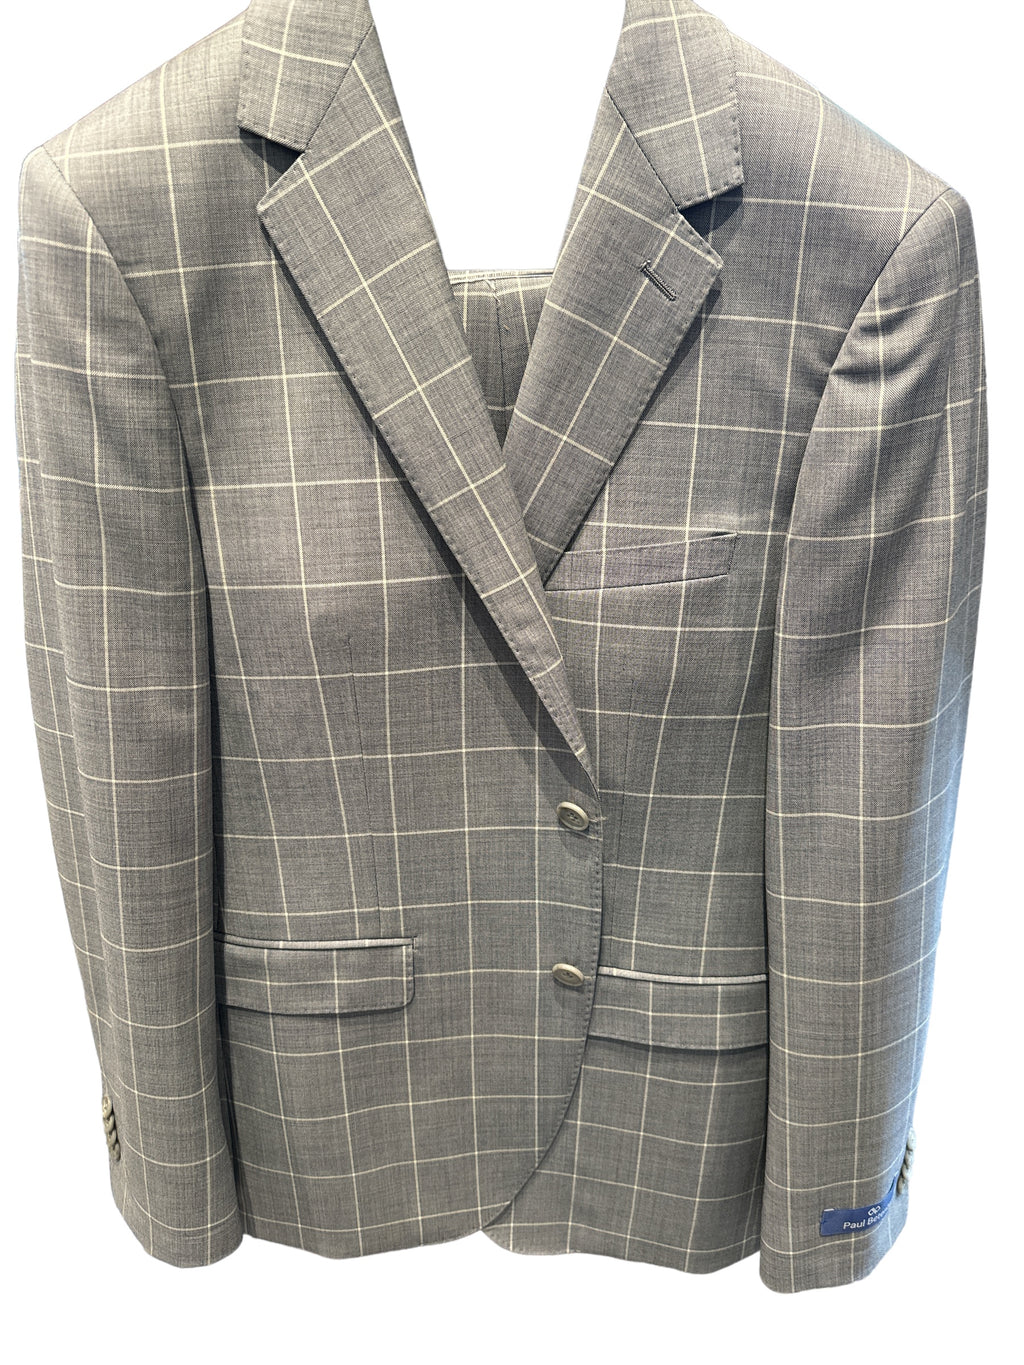 Paul Betenly - Ronaldo Suit - Light Grey Check